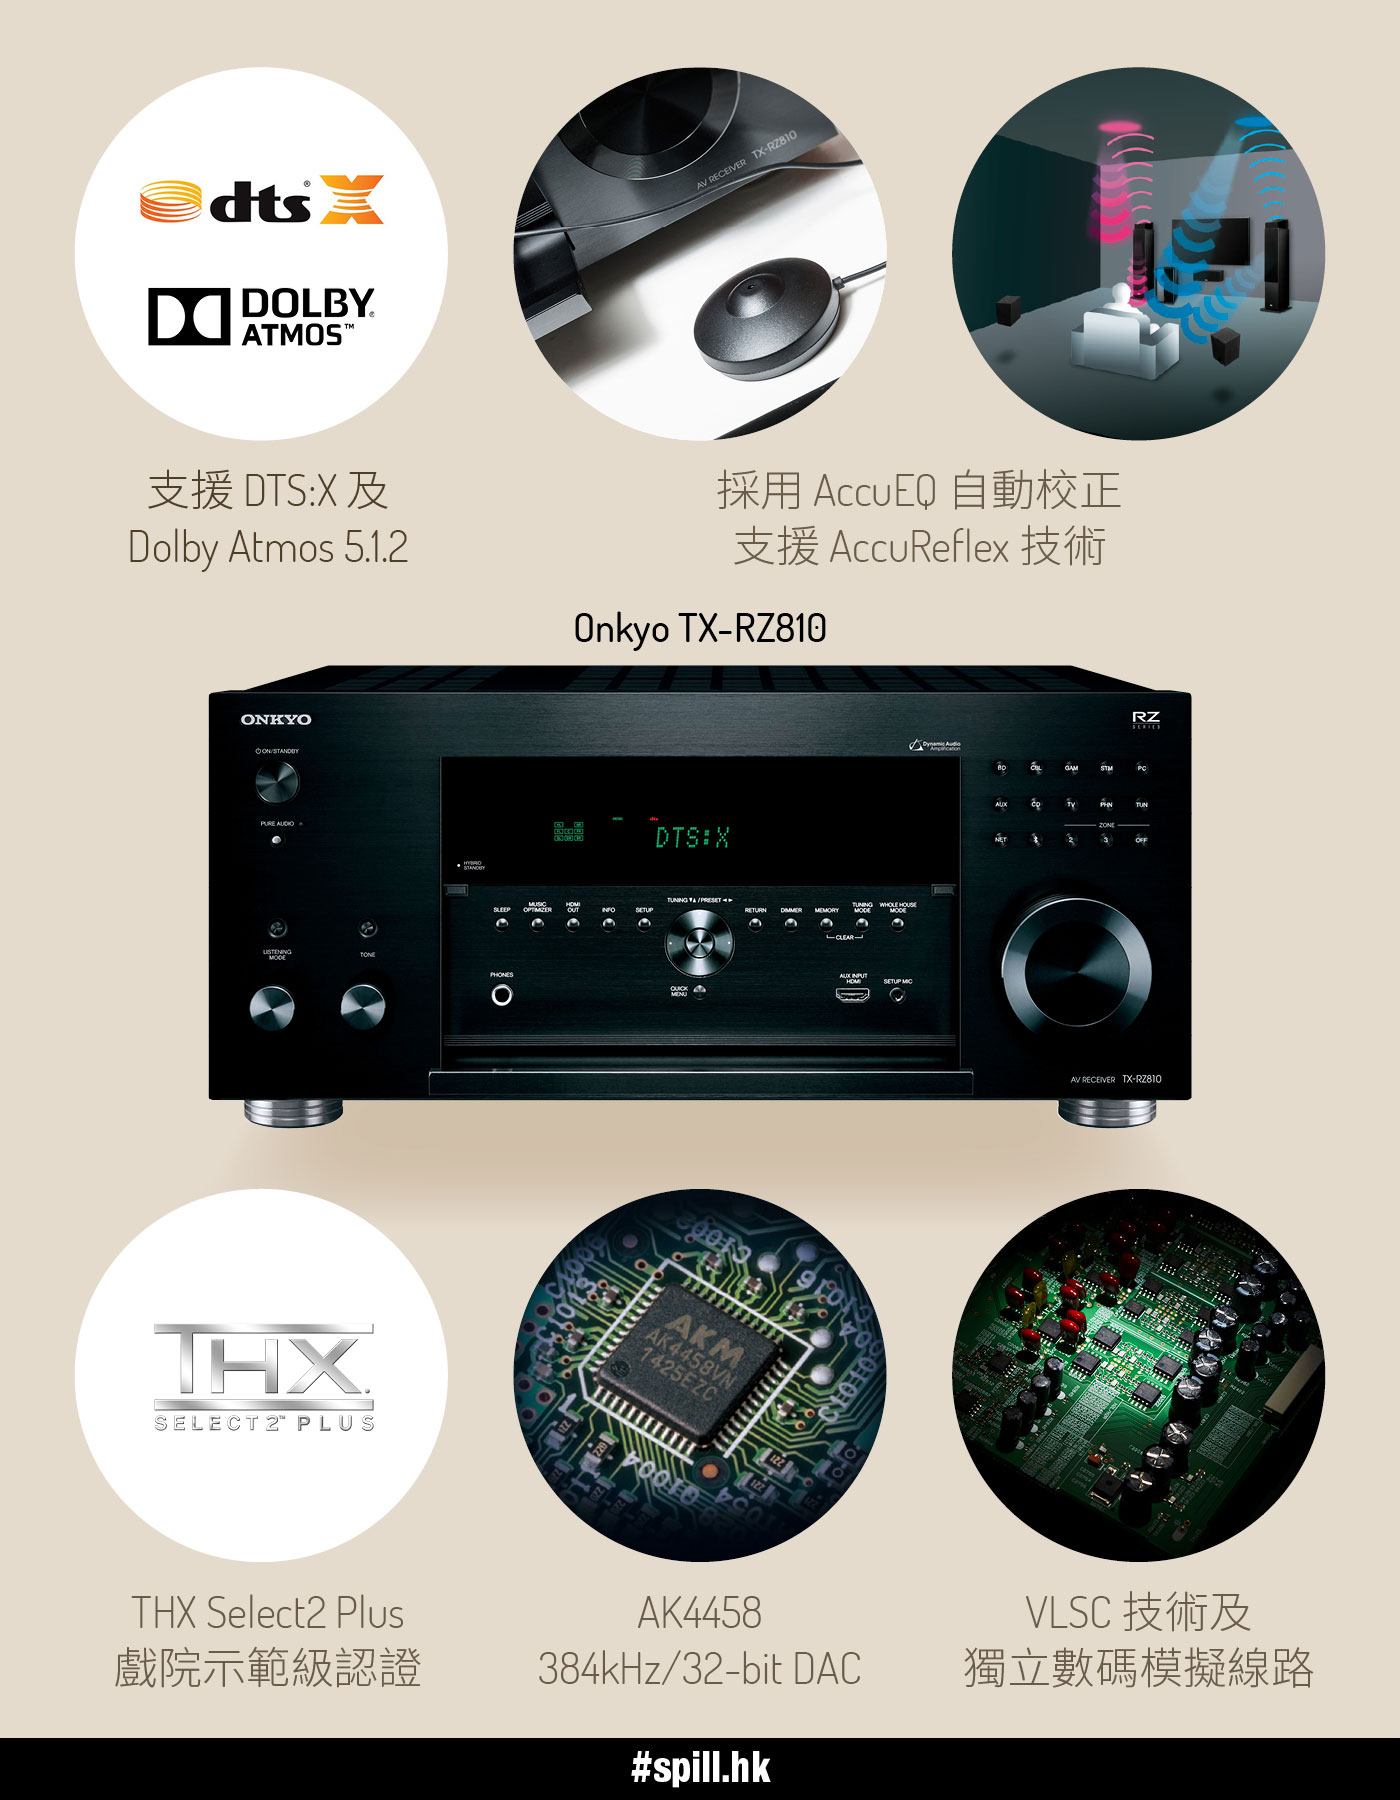 Onkyo 上年新設計的 TX-RZ800 中階擴音機相當受歡迎，今年再下一城，最新後繼機 TX-RZ810 除了獲得 THX Select2 Plus 認證之外，更加支援 Dolby Atmos、DTS:X、4K HDR 等最新的影音規格，加上 AirPlay、Google Cast*、TIDAL 等串流功能，可以話係市面上其中一款最全面的中階 AV 合併機。